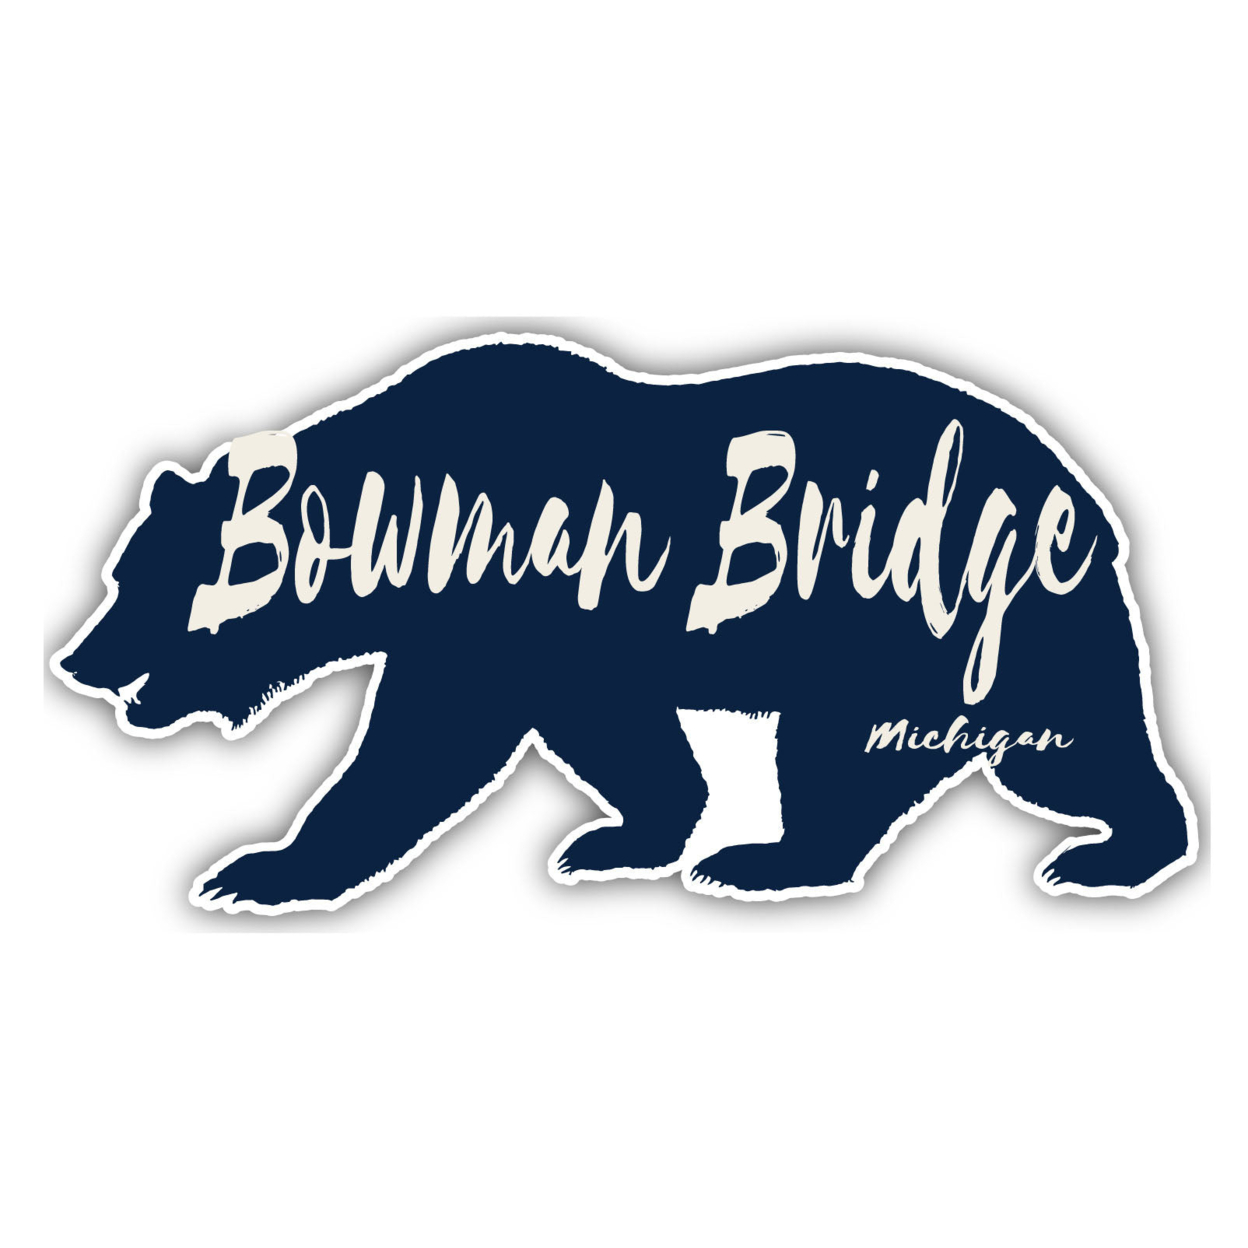 Bowman Bridge Michigan Souvenir Decorative Stickers (Choose Theme And Size) - 4-Pack, 8-Inch, Bear